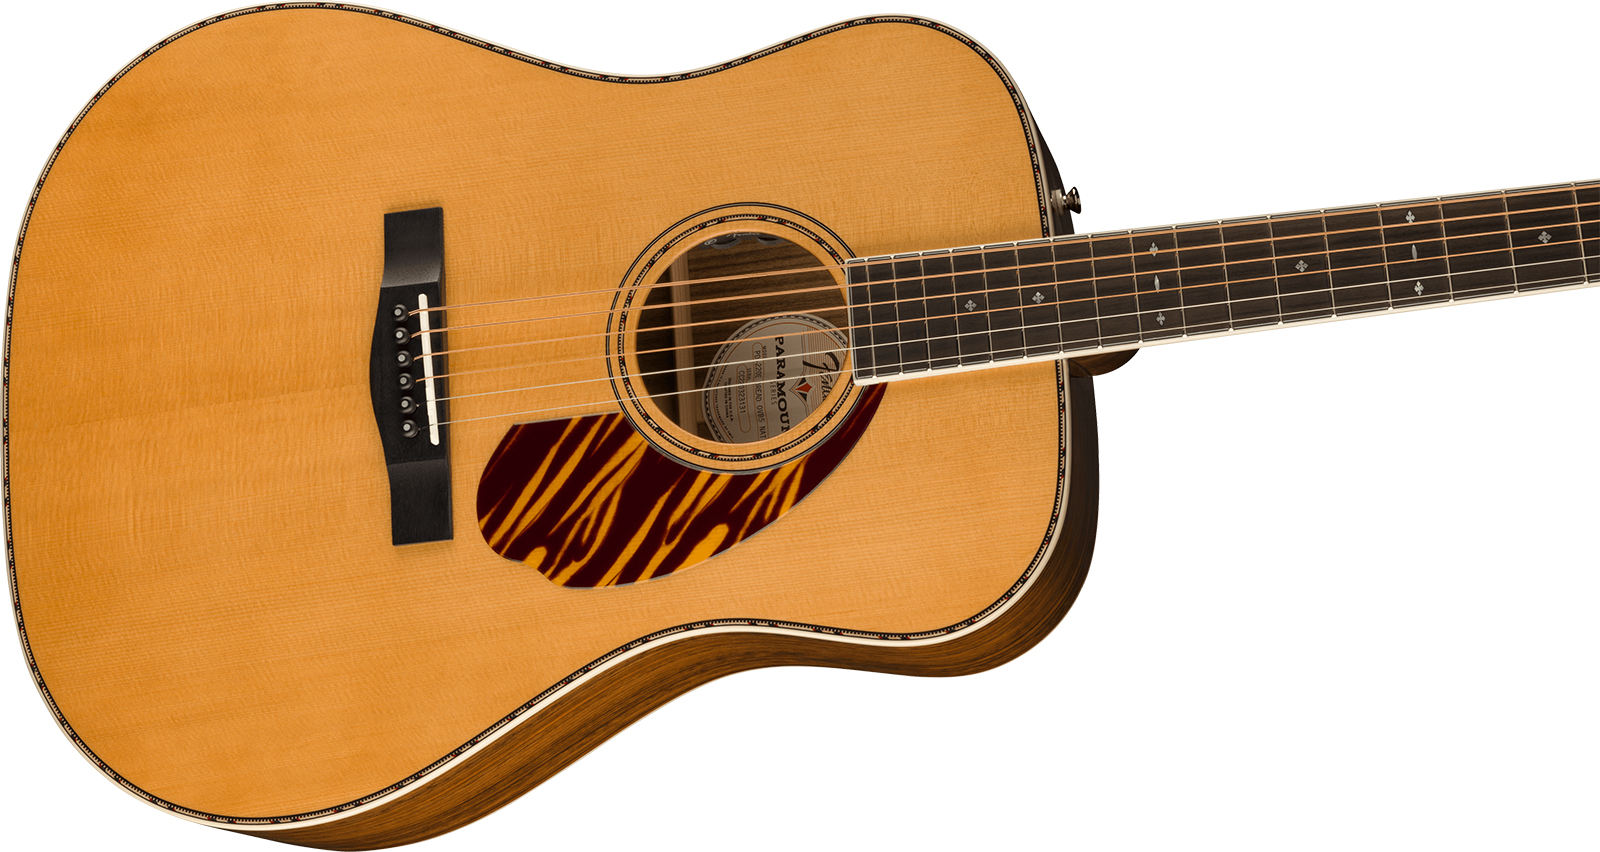 Fender Pd-220e Paramount Fsr Ltd Dreadnought Epicea Ovangkol Ova - Aged Natural - Electro acoustic guitar - Variation 2